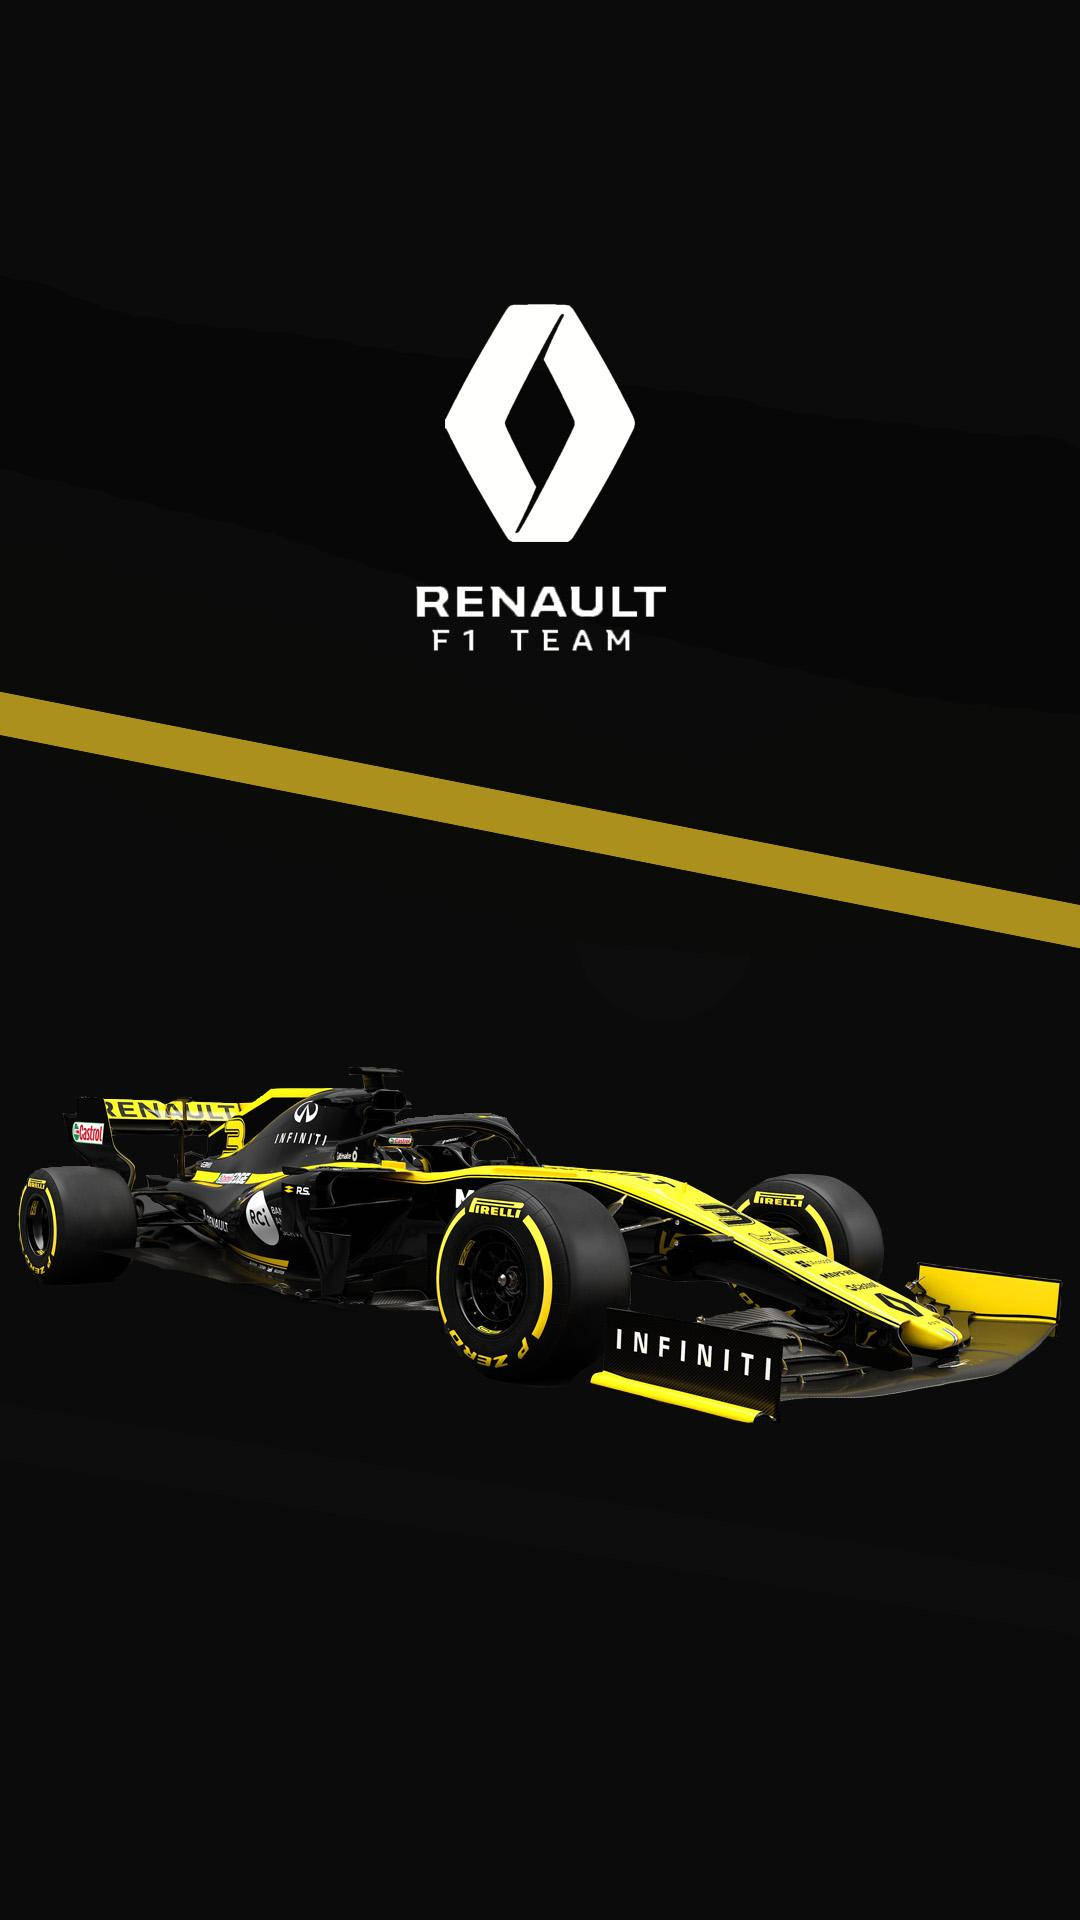 Logotipodel Equipo Renault F1 Fondo de pantalla